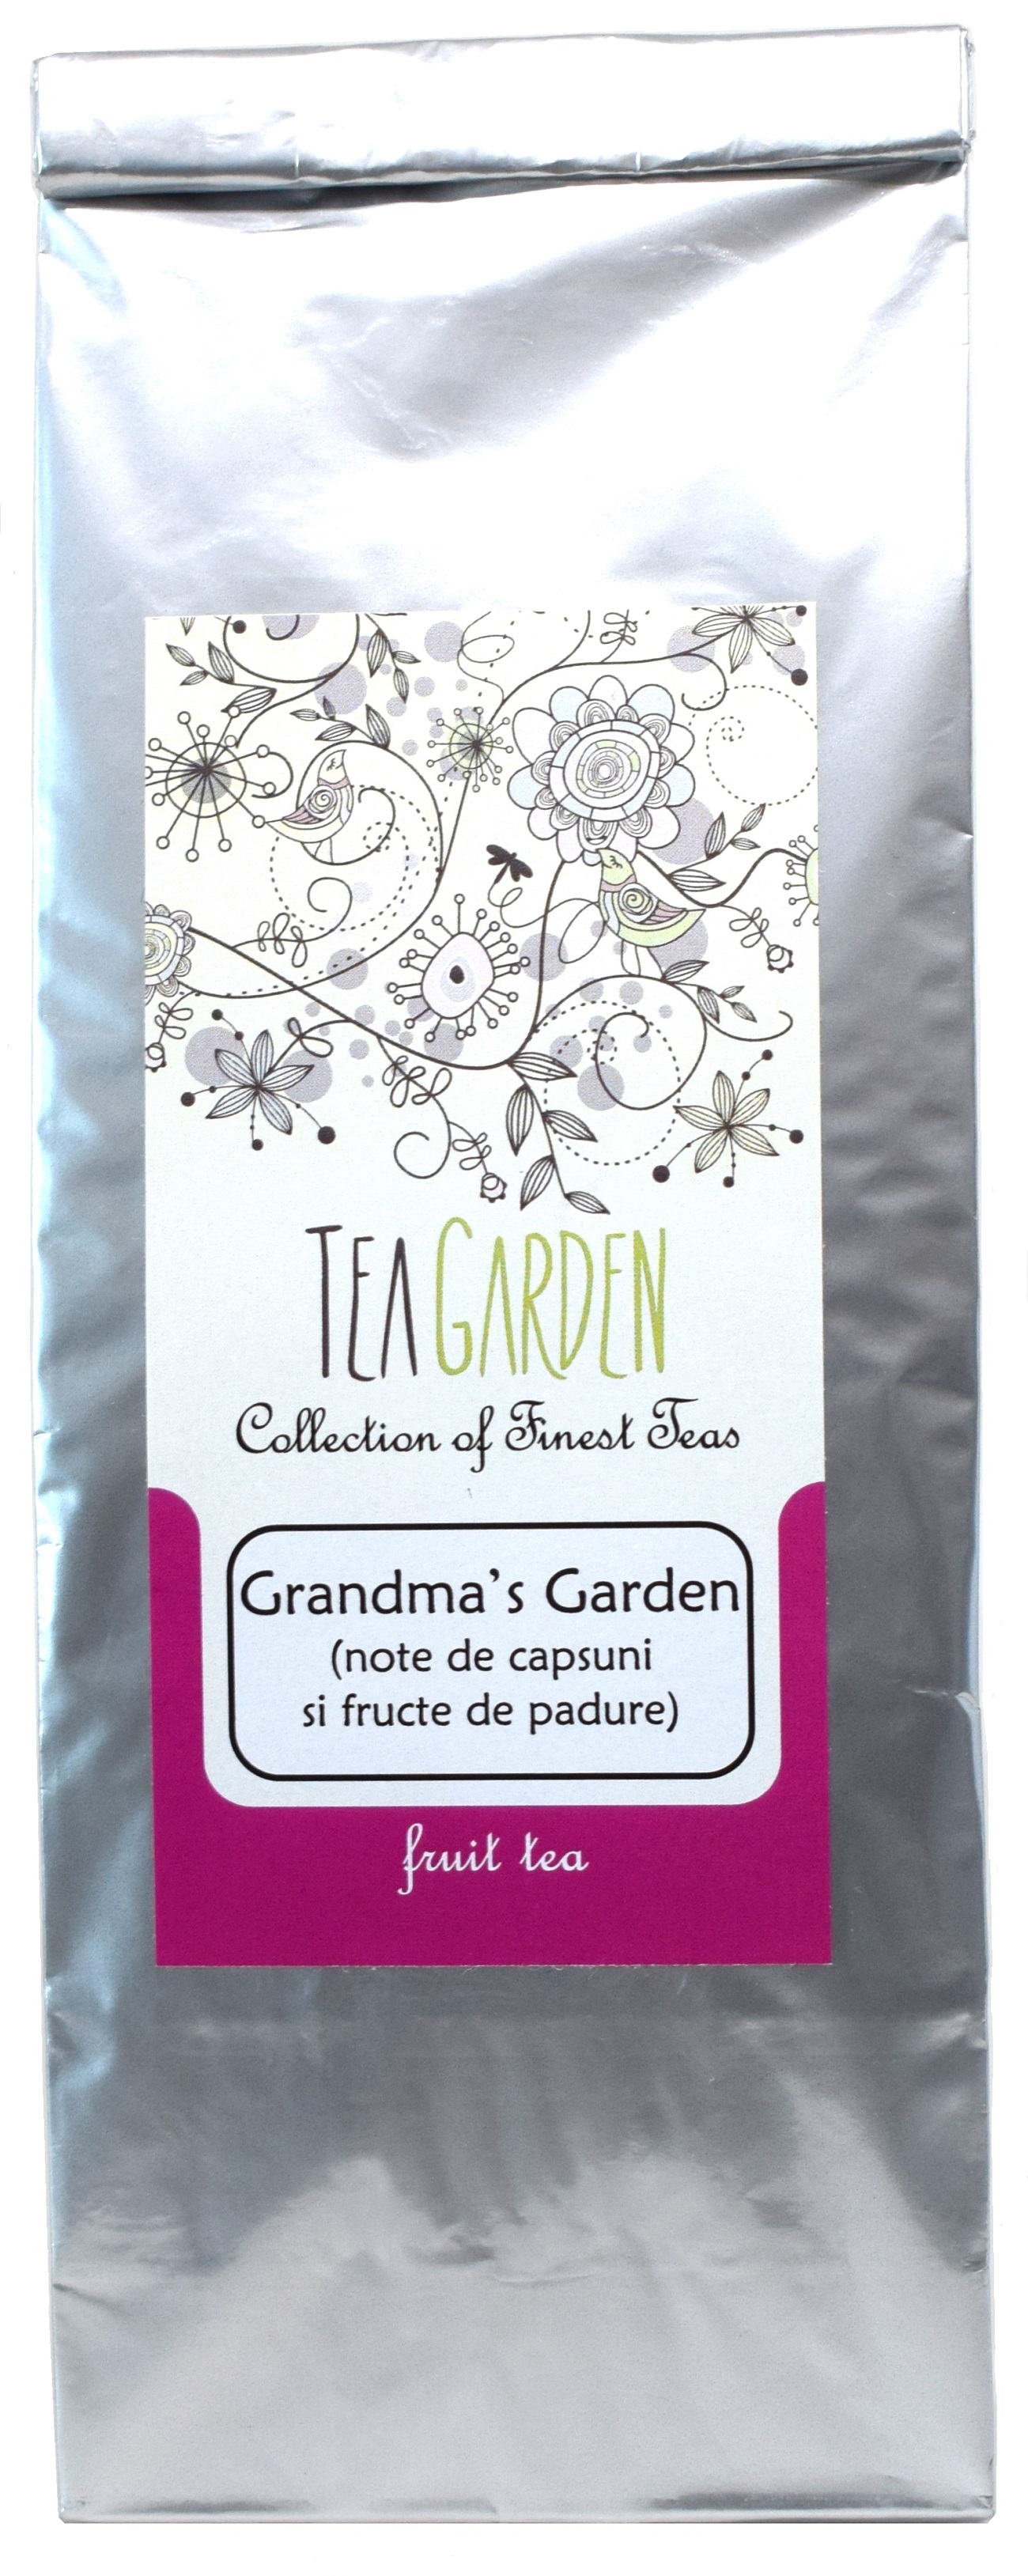 Ceai Grandma's Garden